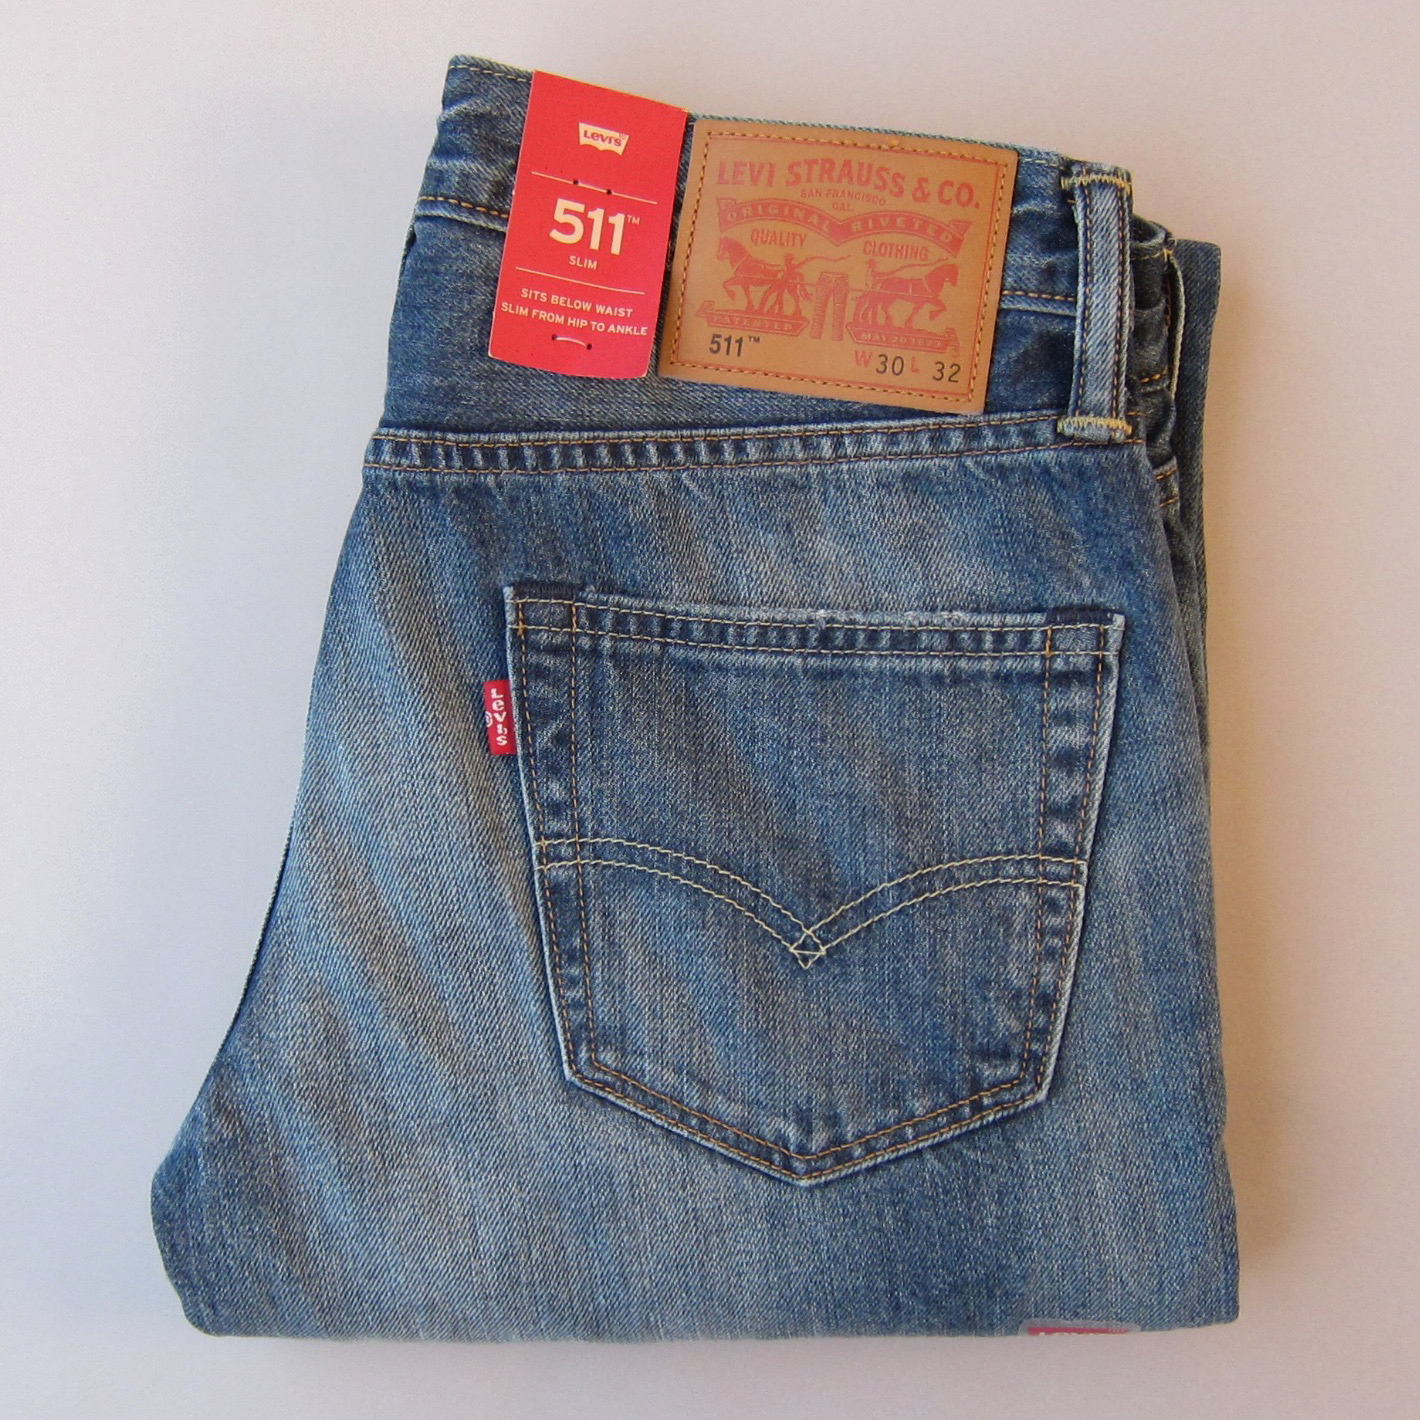 levis 511 premium jeans